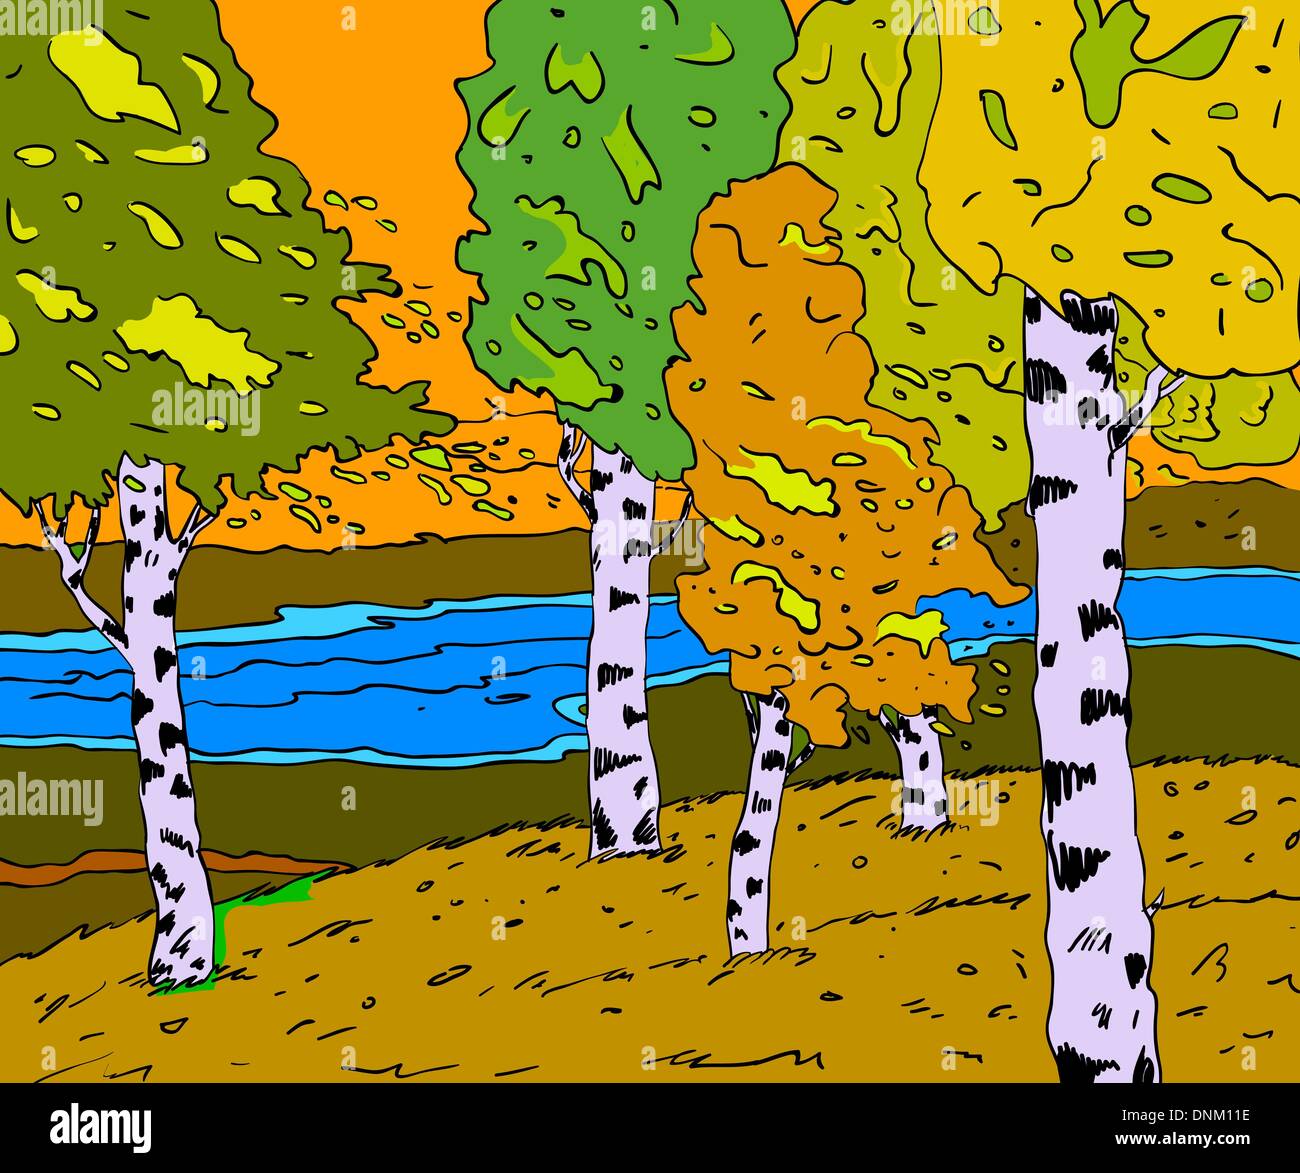 Herbst sonnige Landschaft mit Wald Fluss - Vektor-illustration Stock Vektor